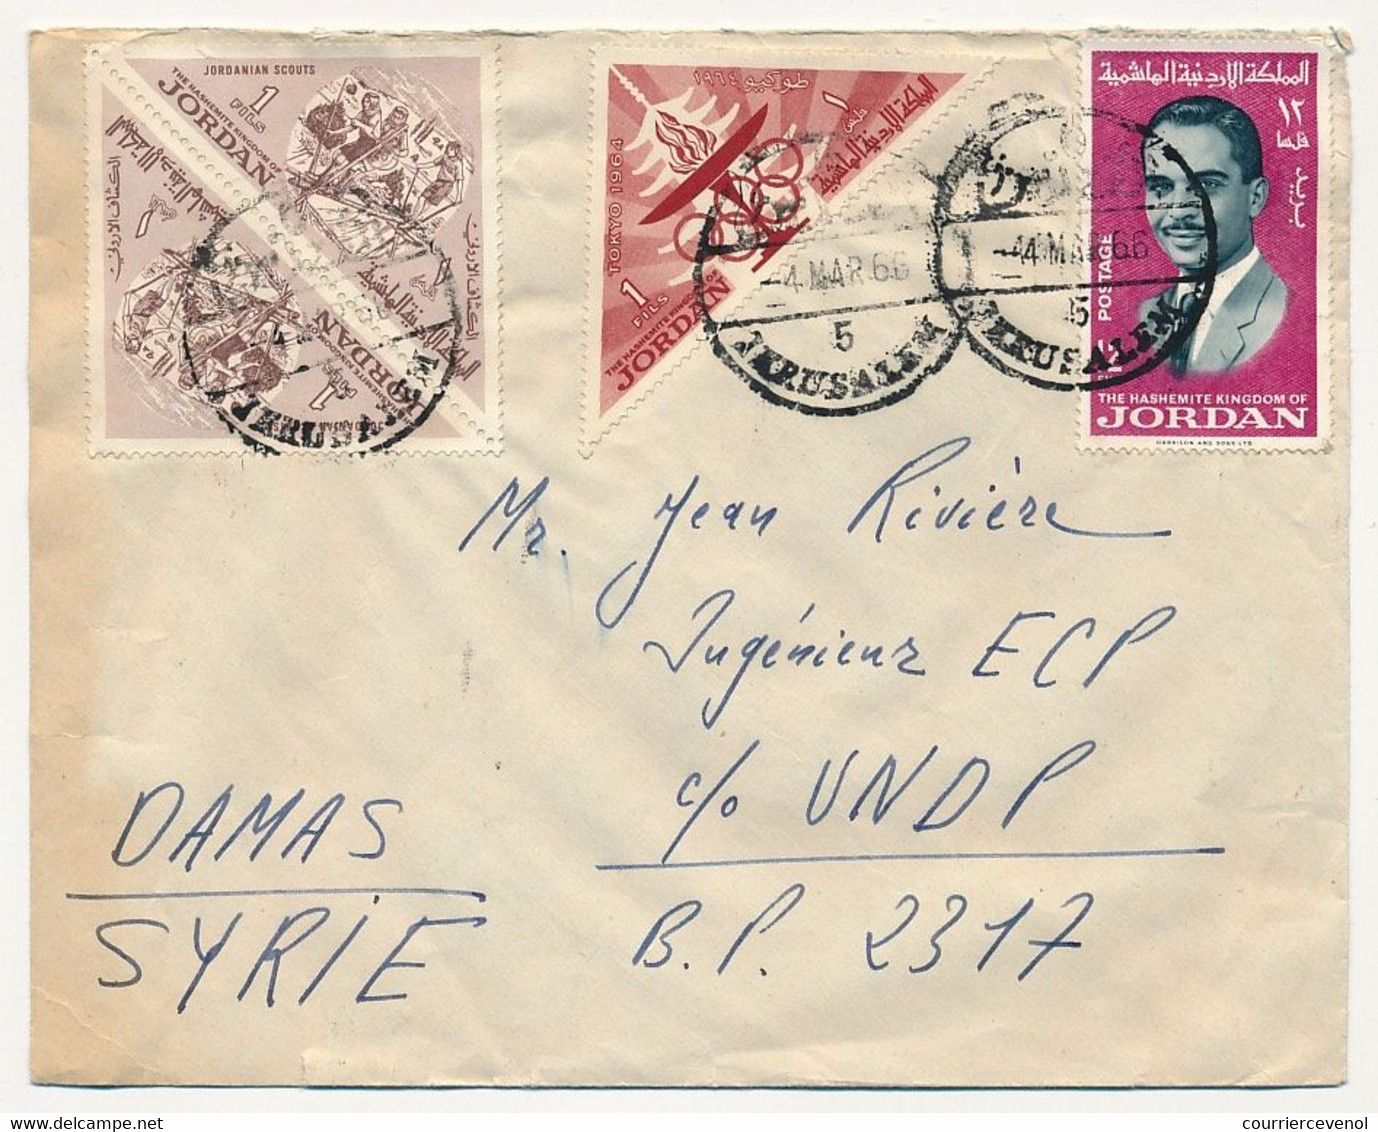 JORDANIE - Enveloppe Affr. Composé - 4 Mars 1966 - JERUSALEM - Jordanien